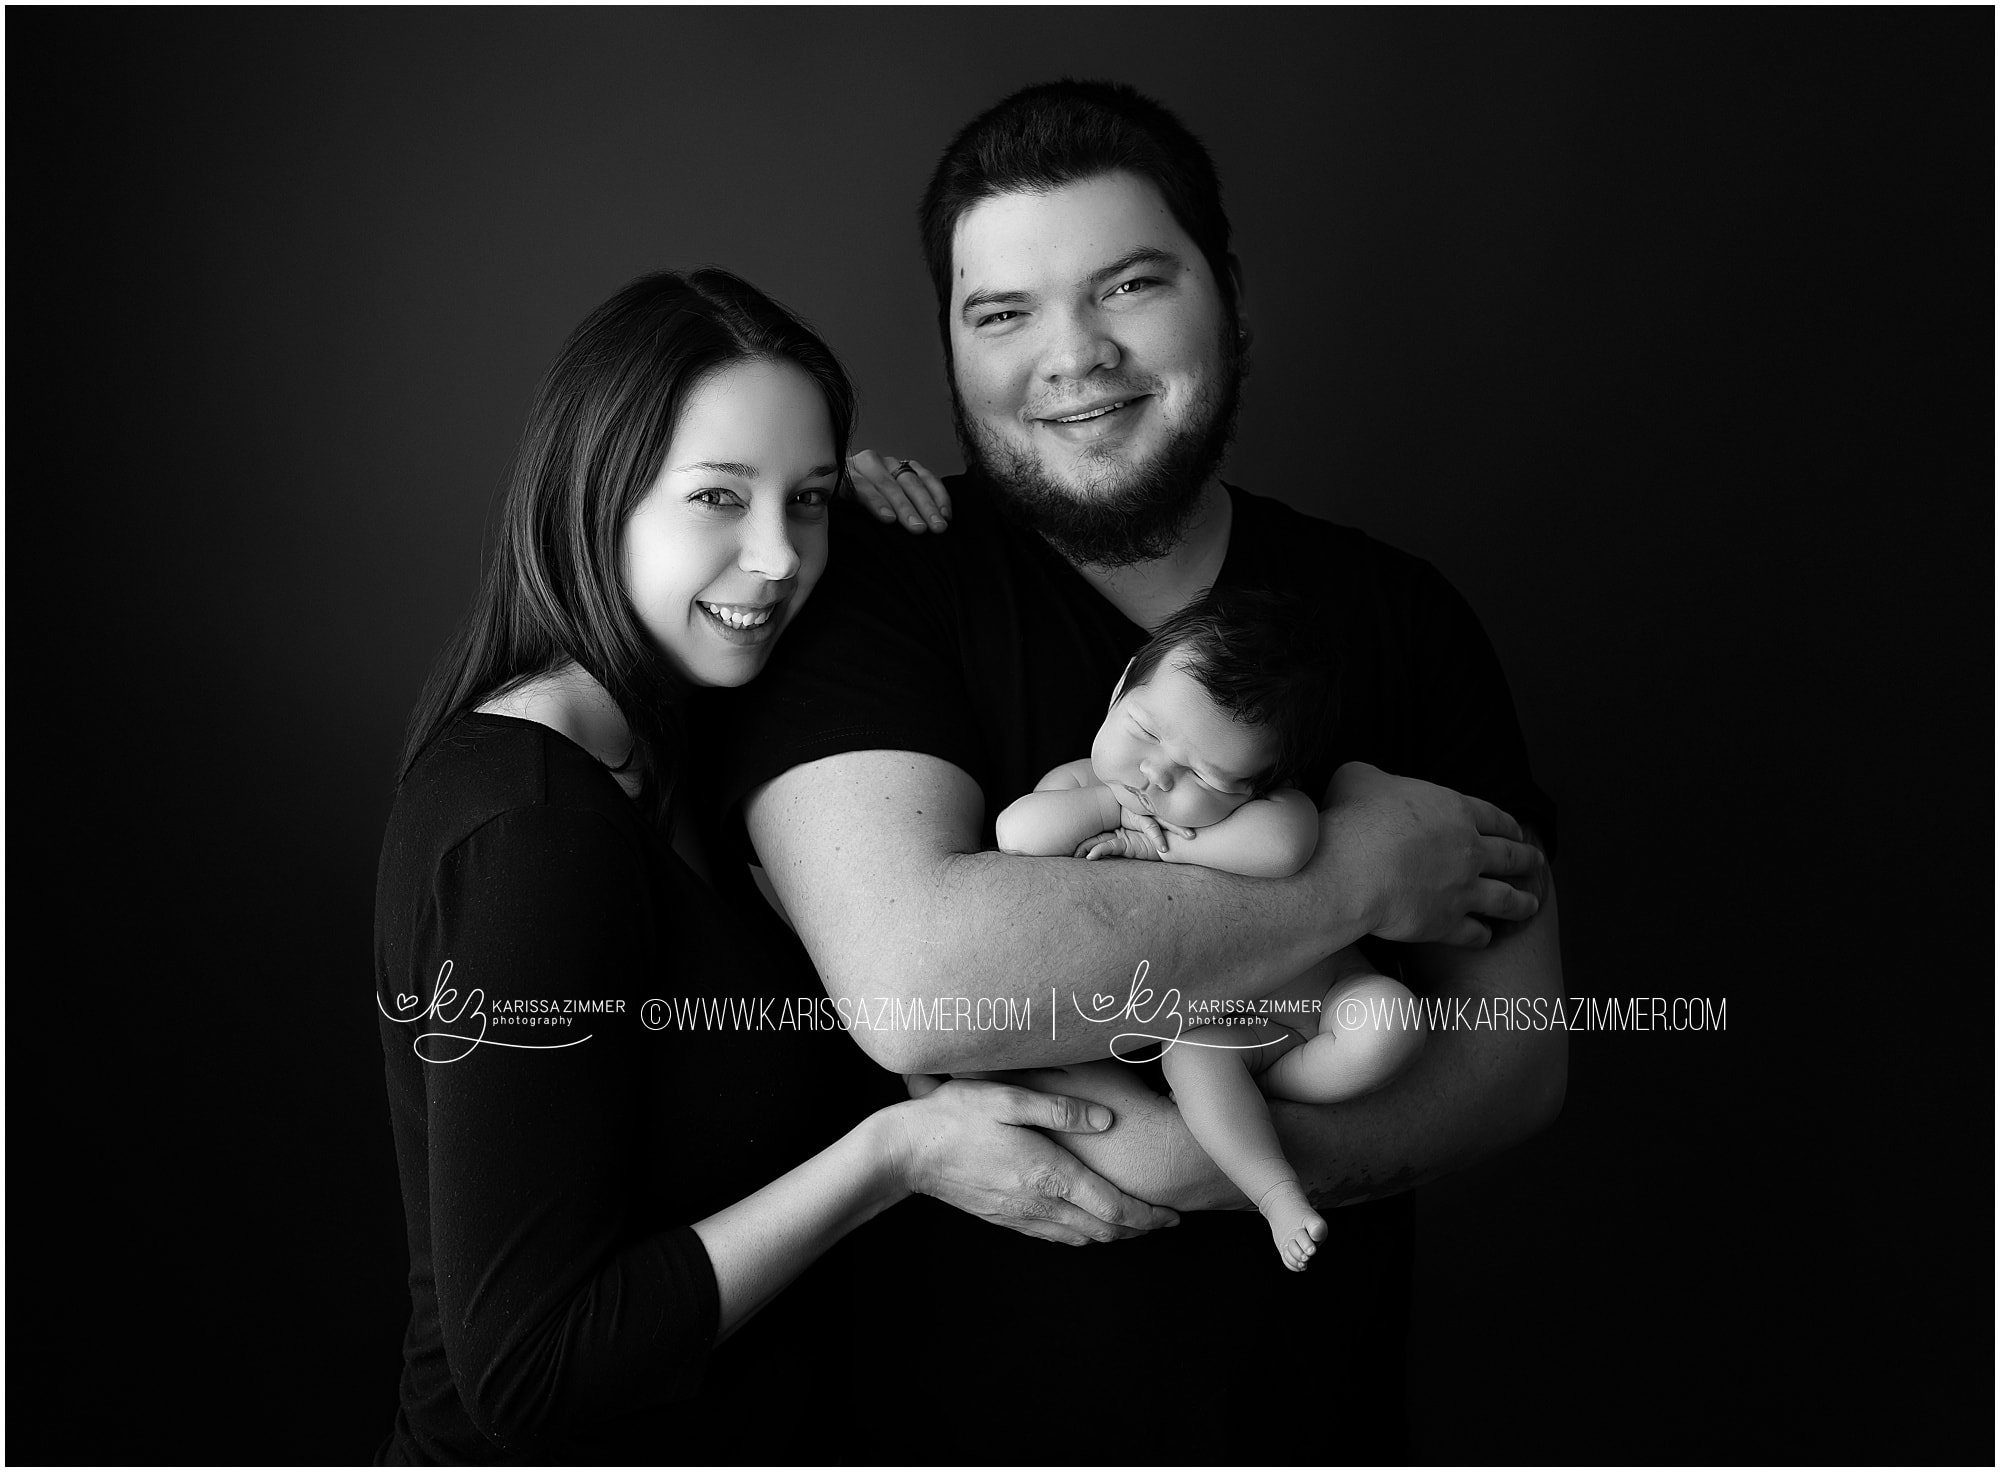 newborn photographer near me, harrisburg baby photography, professional baby photos